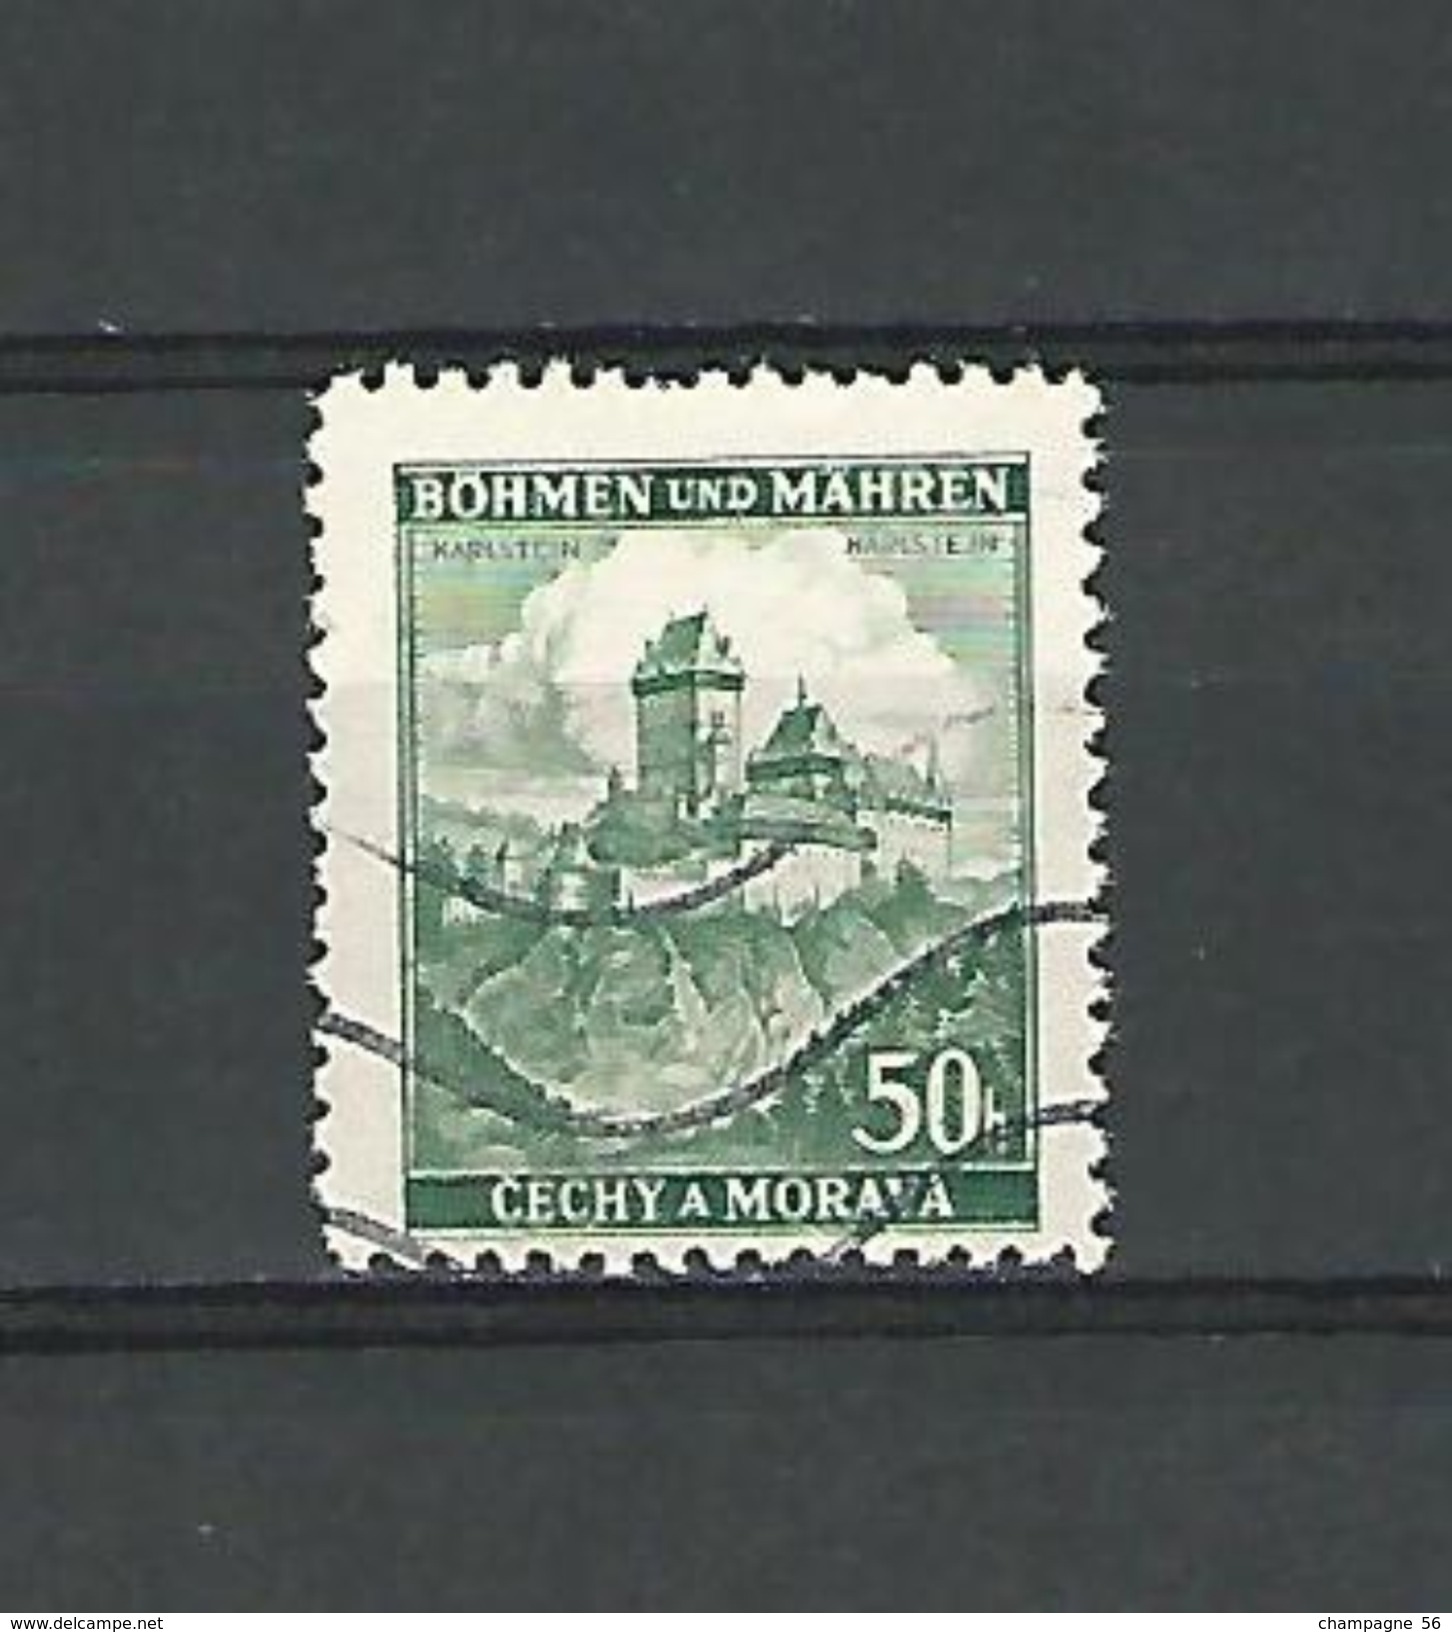 BOHÊME MORAVIE 1939 / 1940 N° 26 BÖHMEN  CHÂTEAU DE KARLUV TYN  50 H  OBLITÉRÉ - Used Stamps